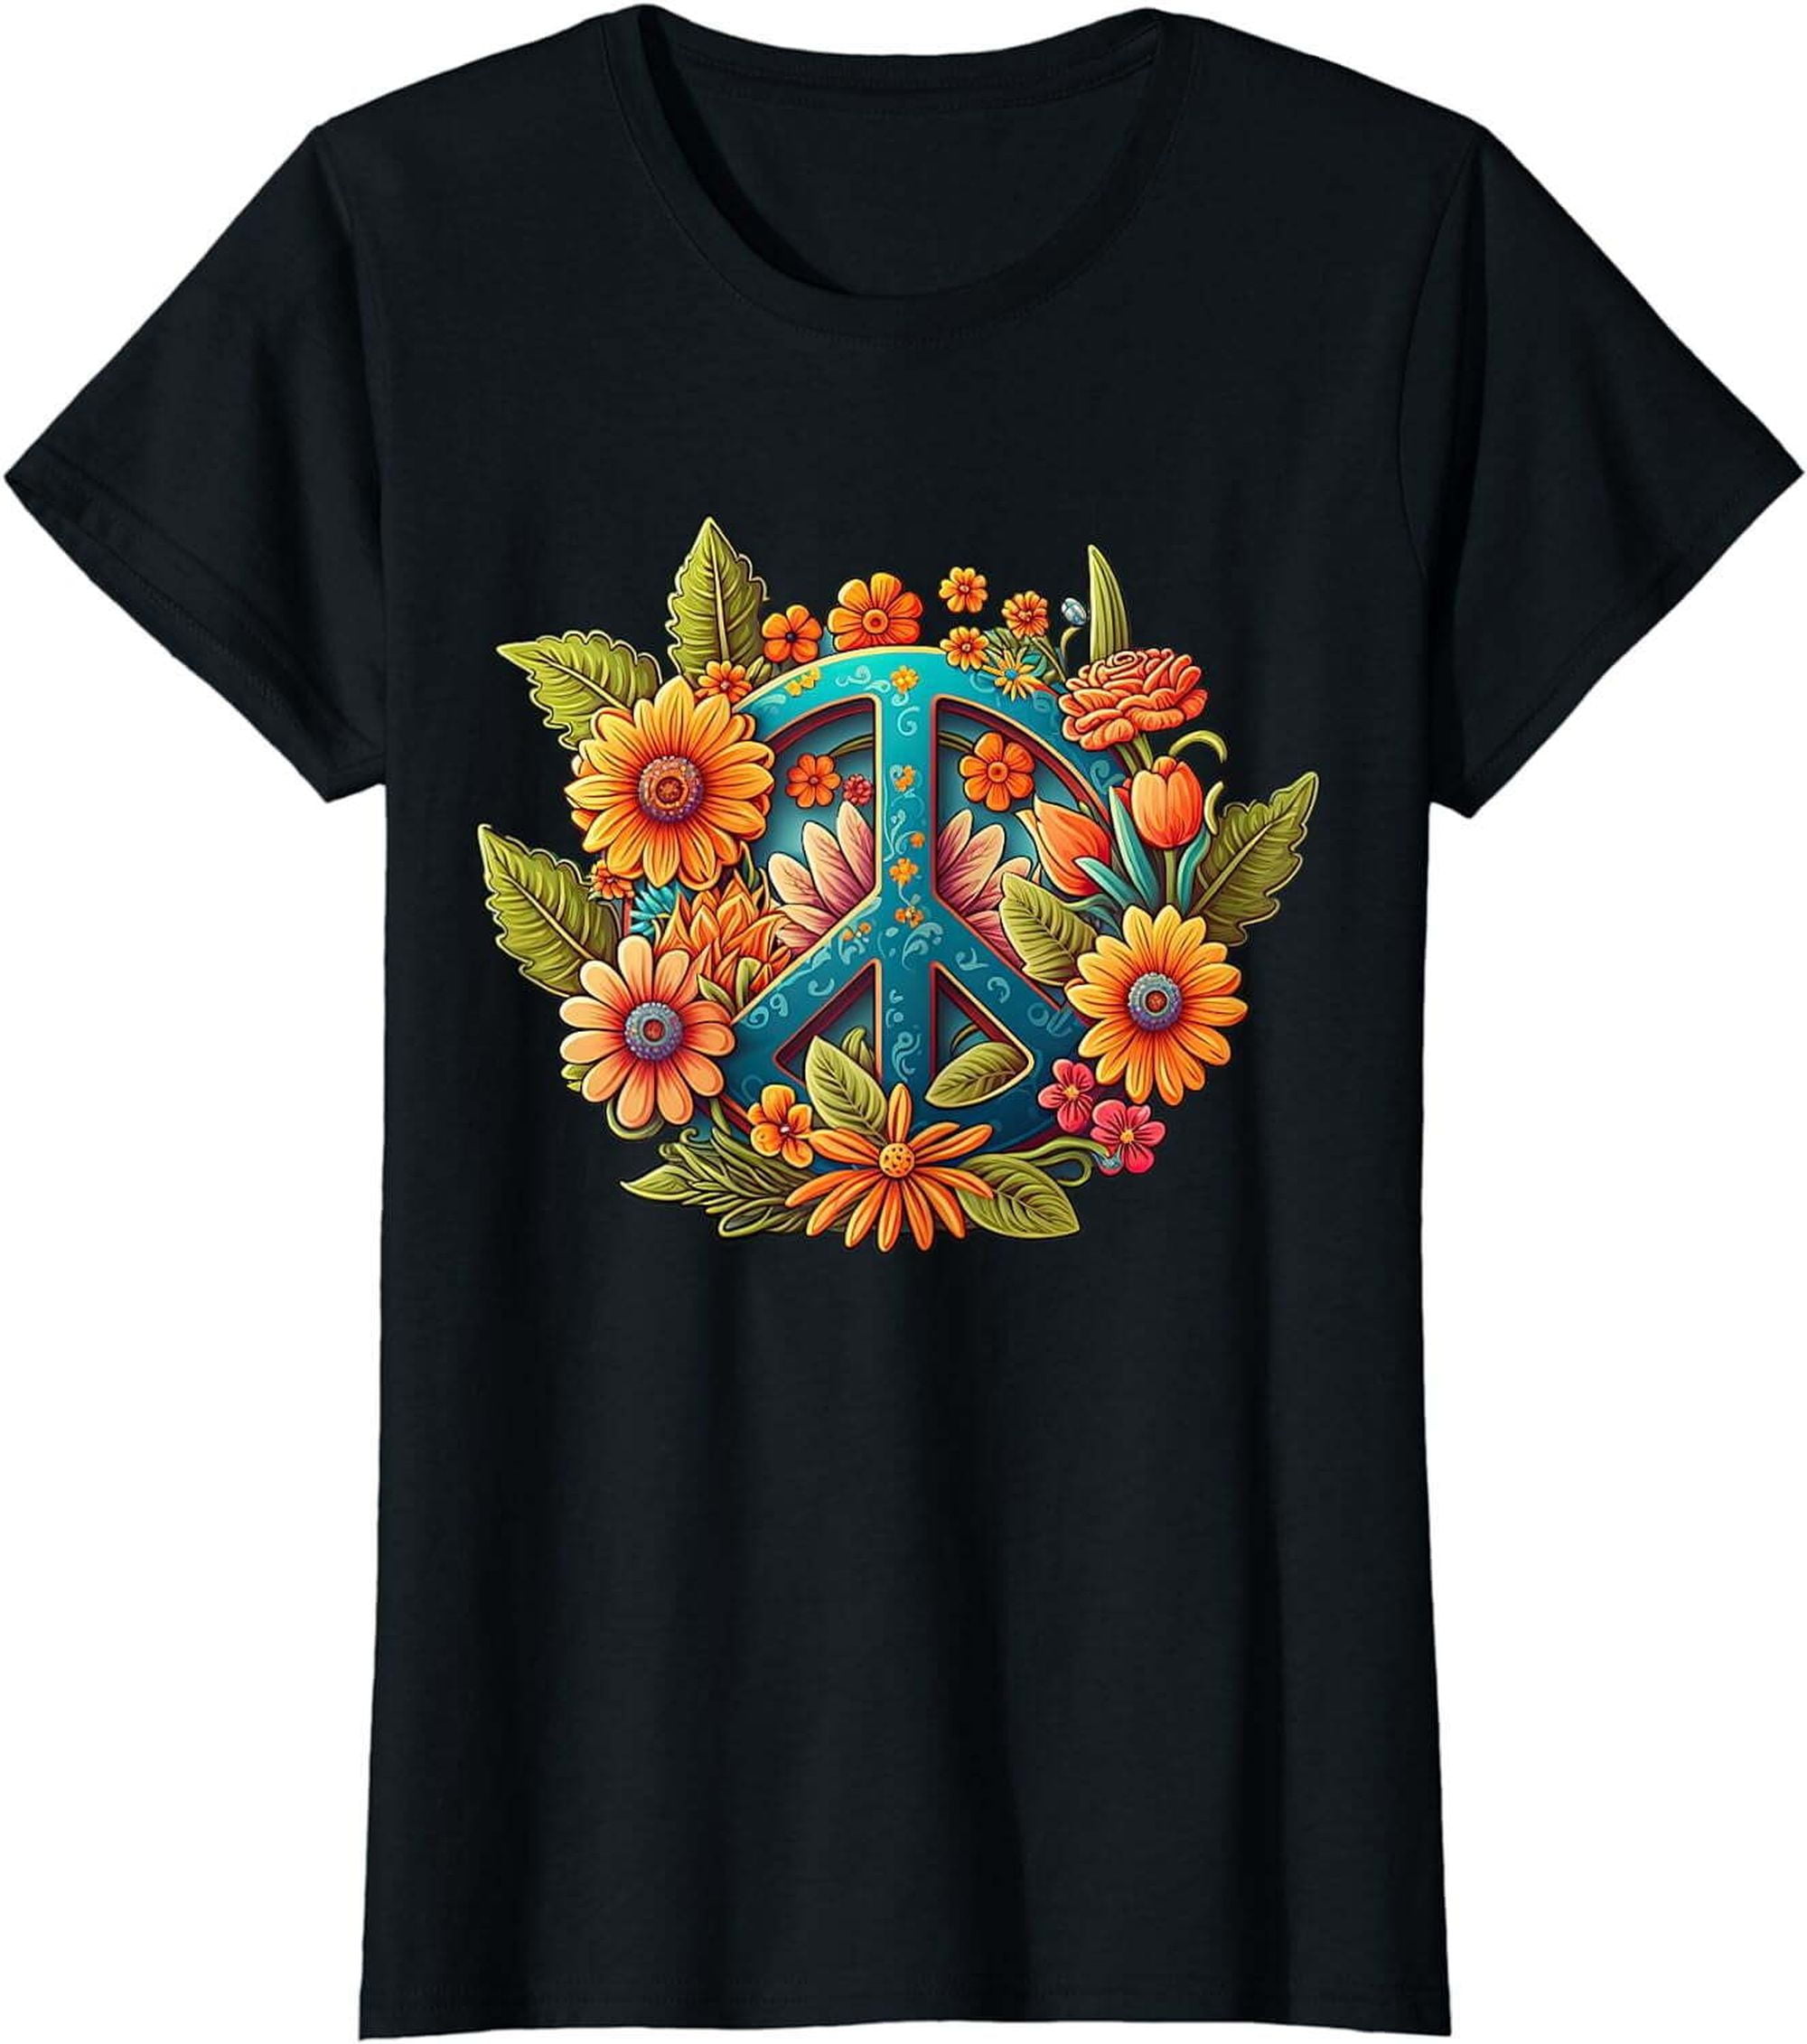 Retro Vibes: Women's Vintage Peace Sign T-Shirt - A Groovy 70s Hippie ...